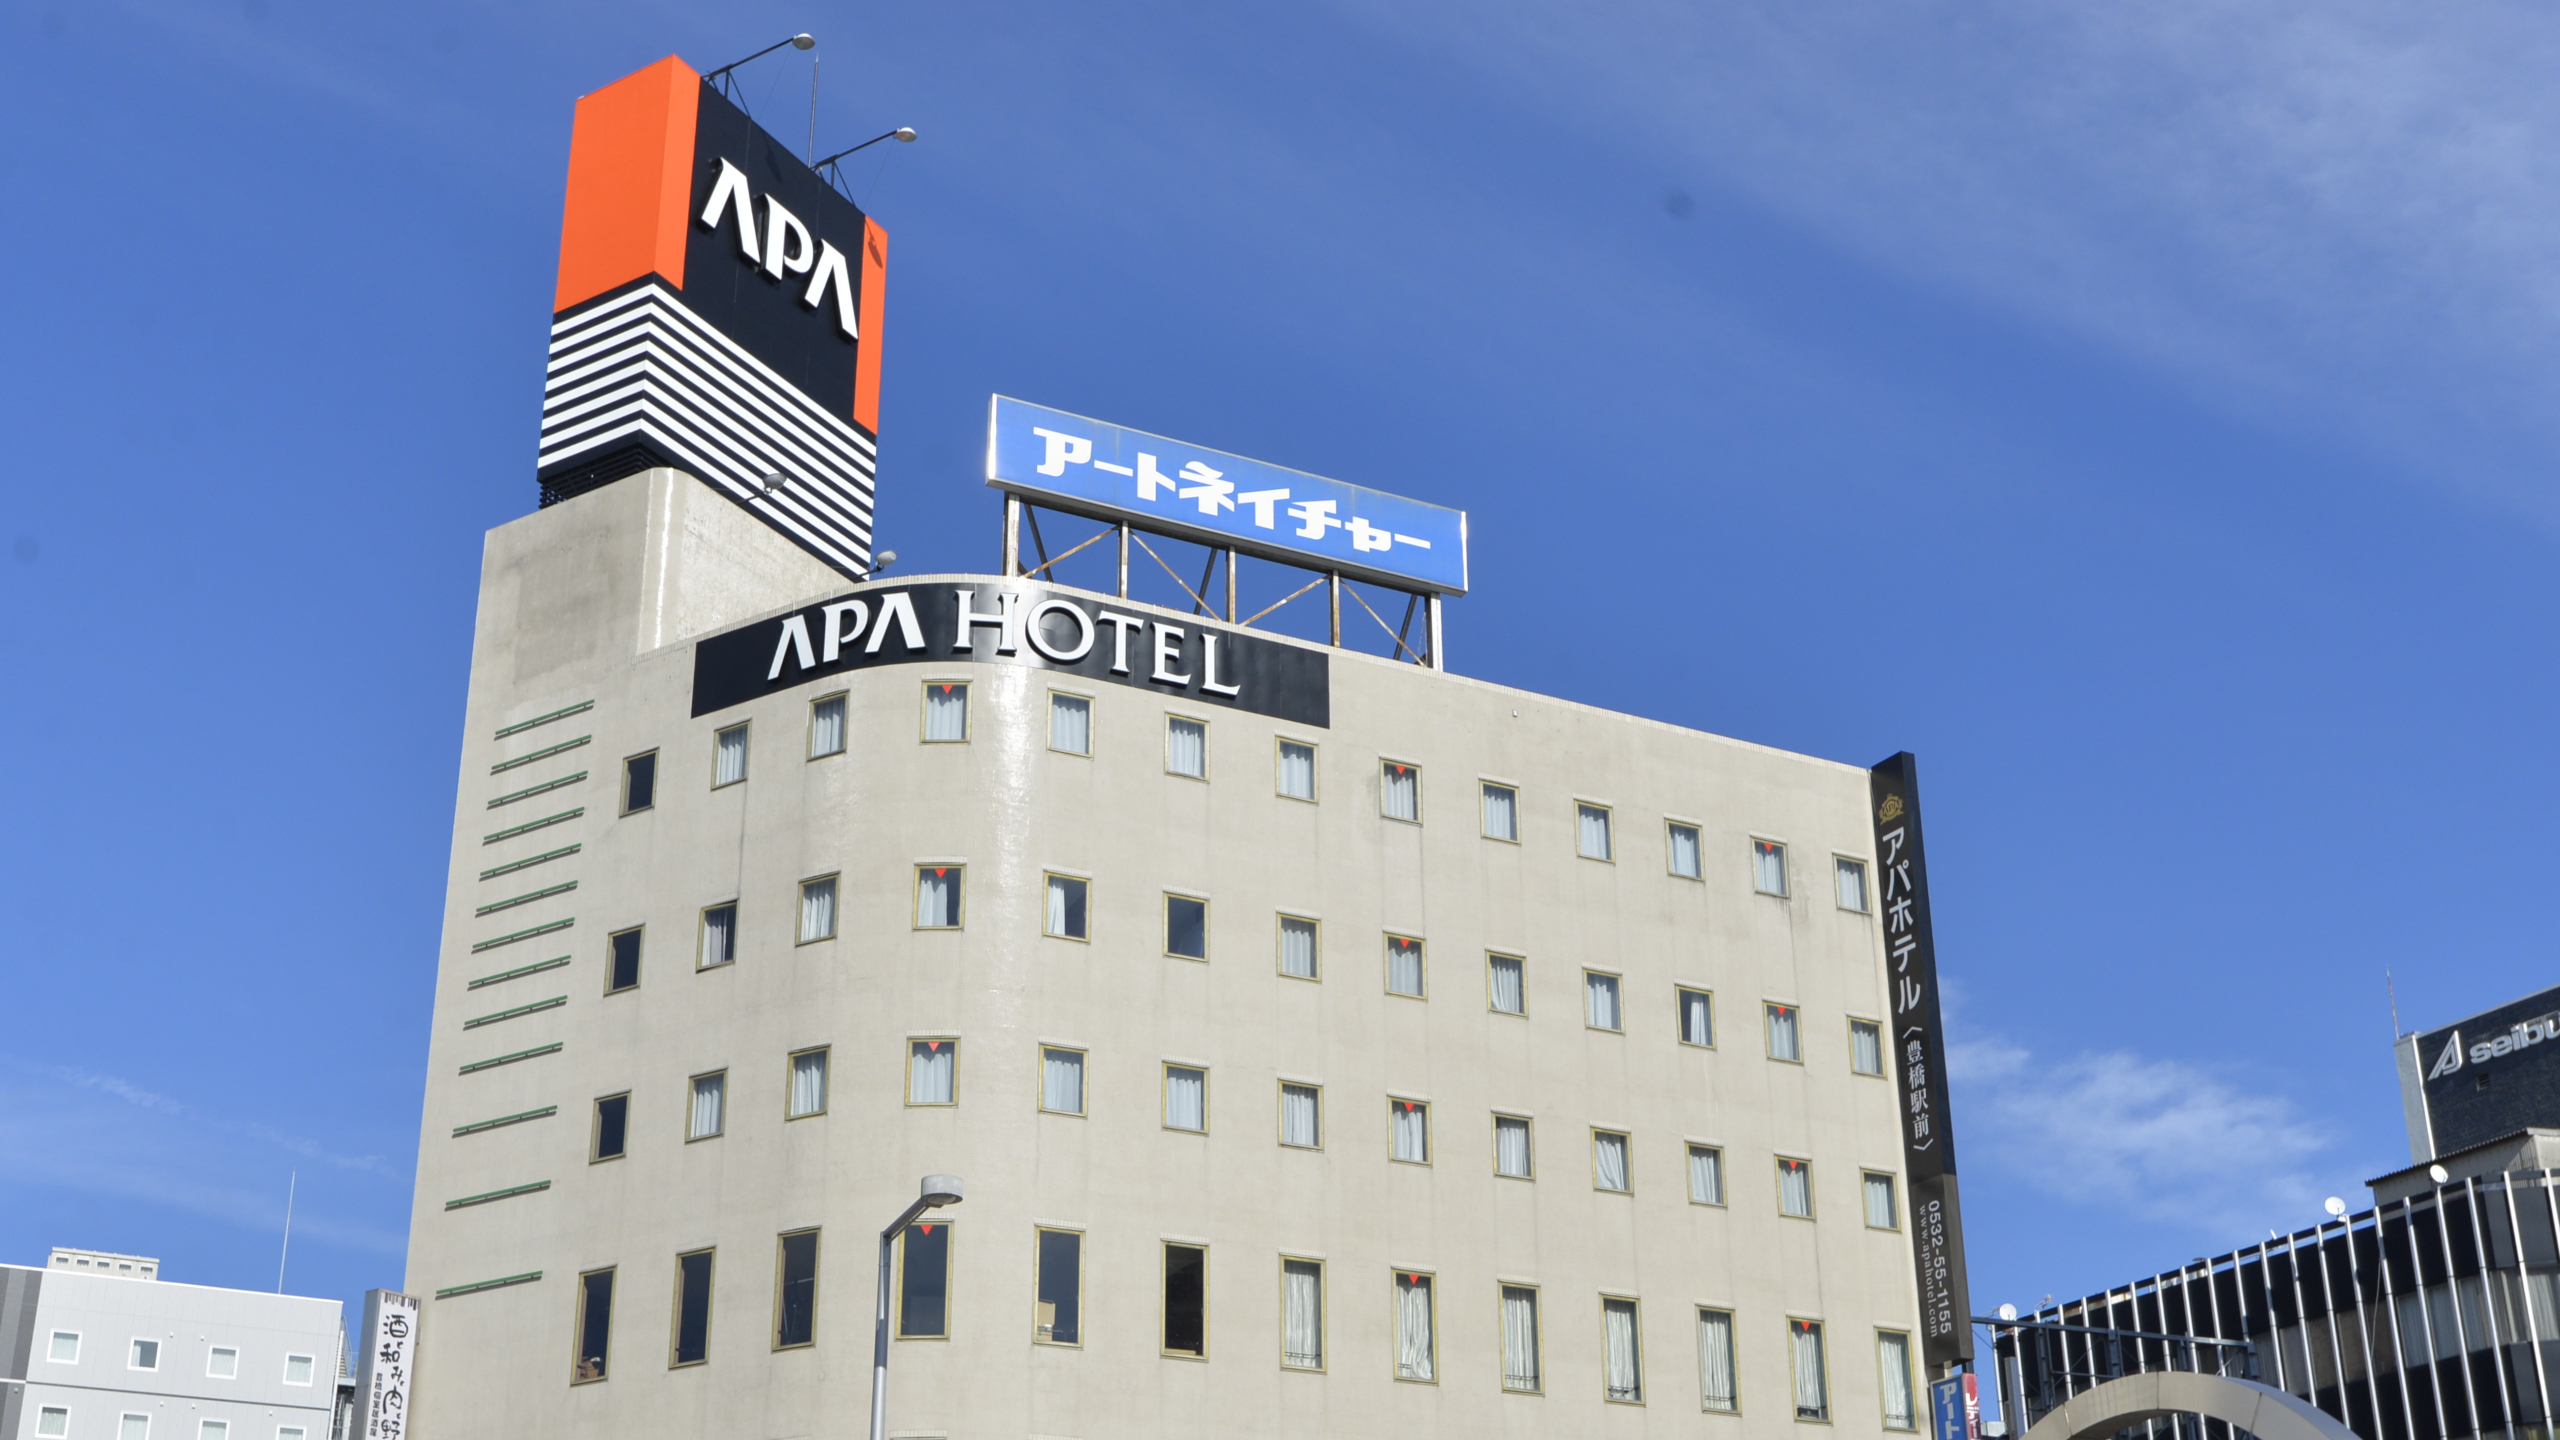 APA 호텔 (도요하시 에키마에)